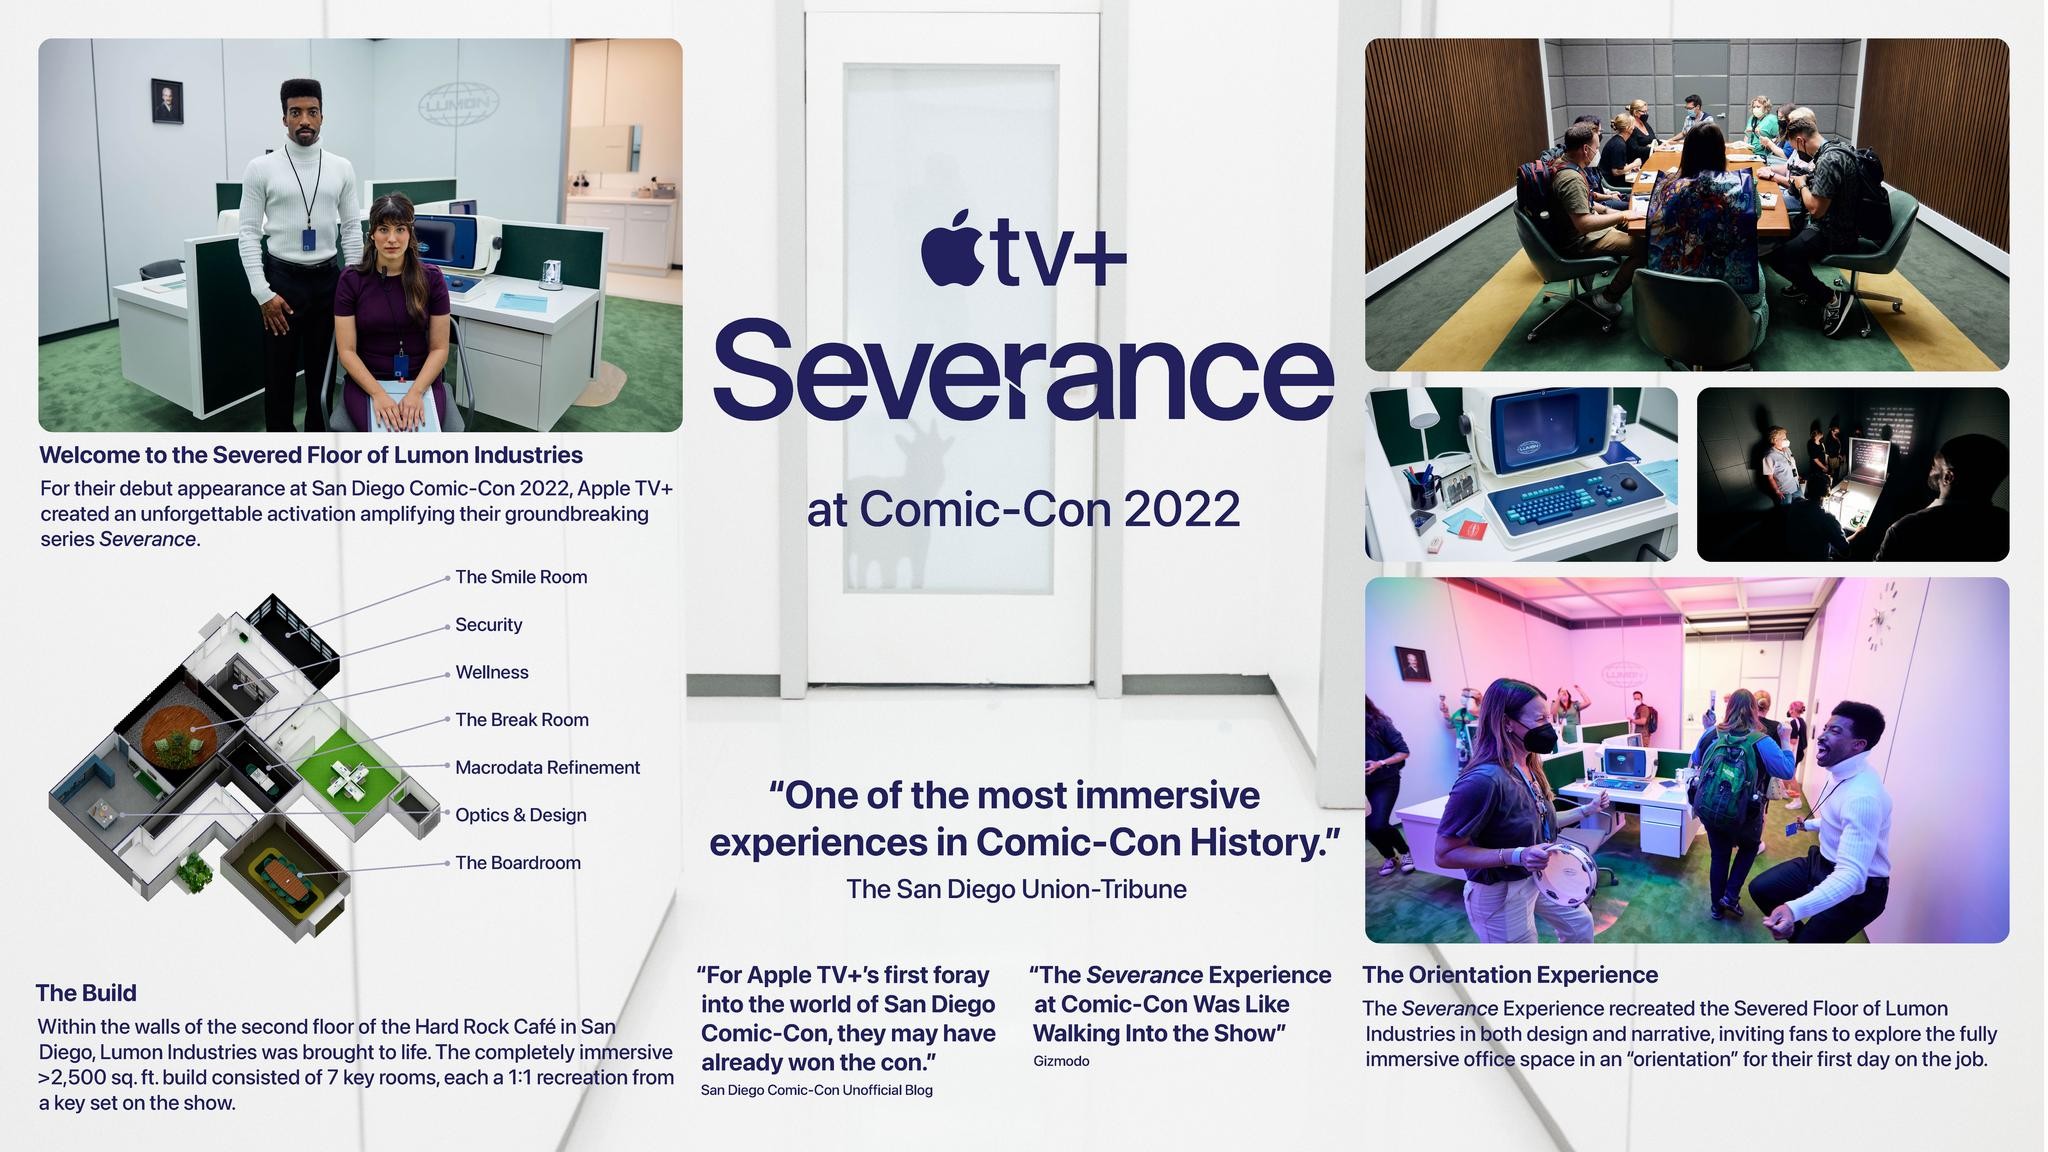 Apple TV+ presents "Severance" at San Diego Comicon 2022